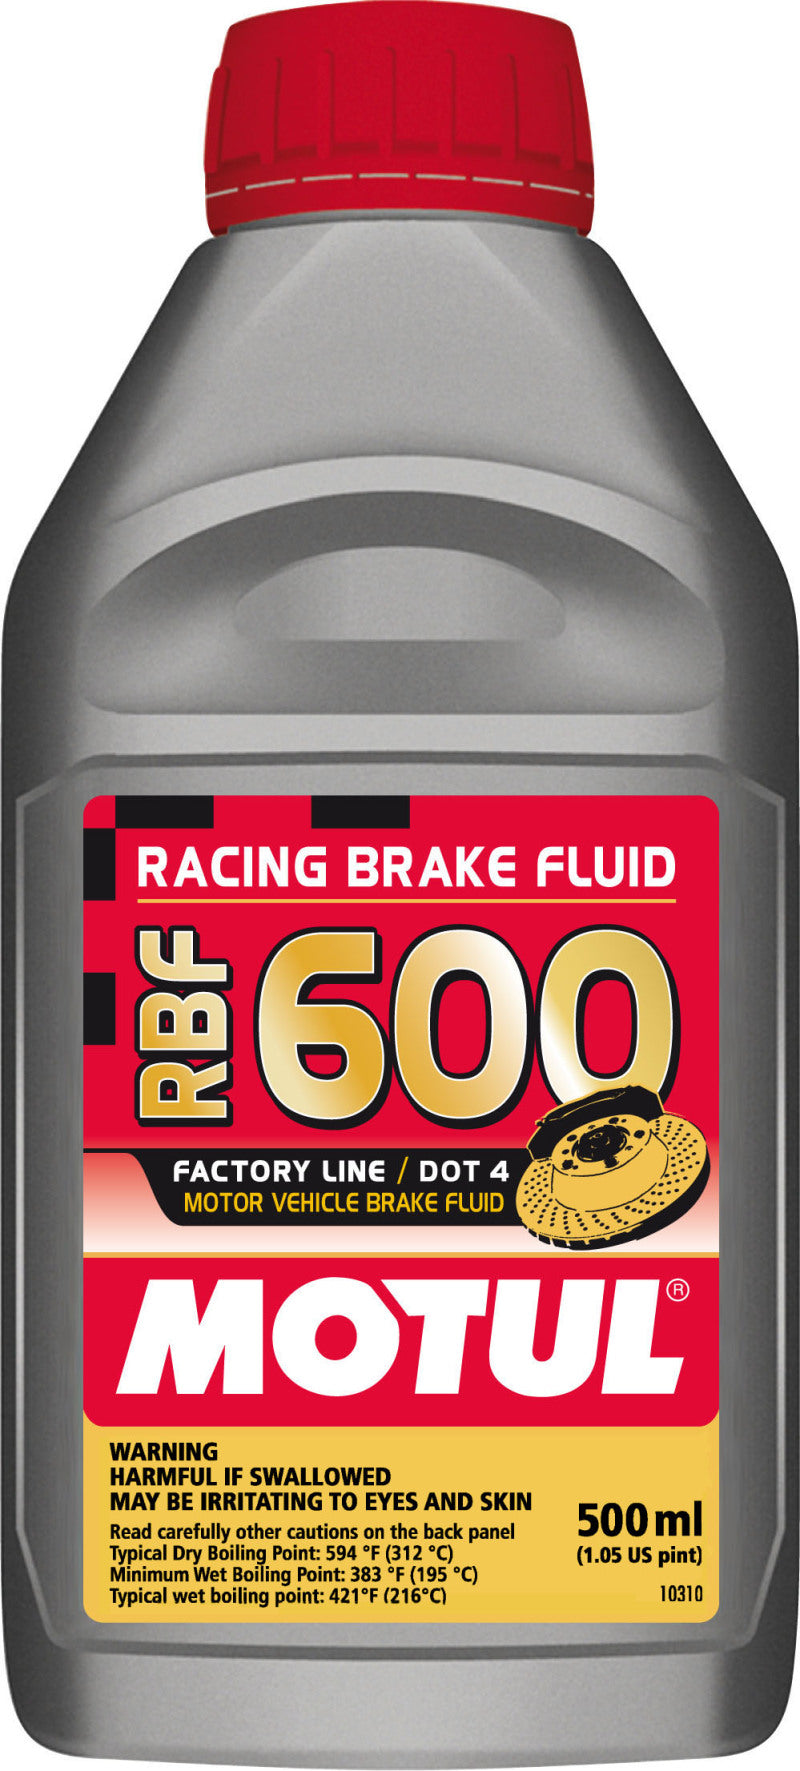 Motul 1/2L Brake Fluid RBF 600 - Racing DOT 4